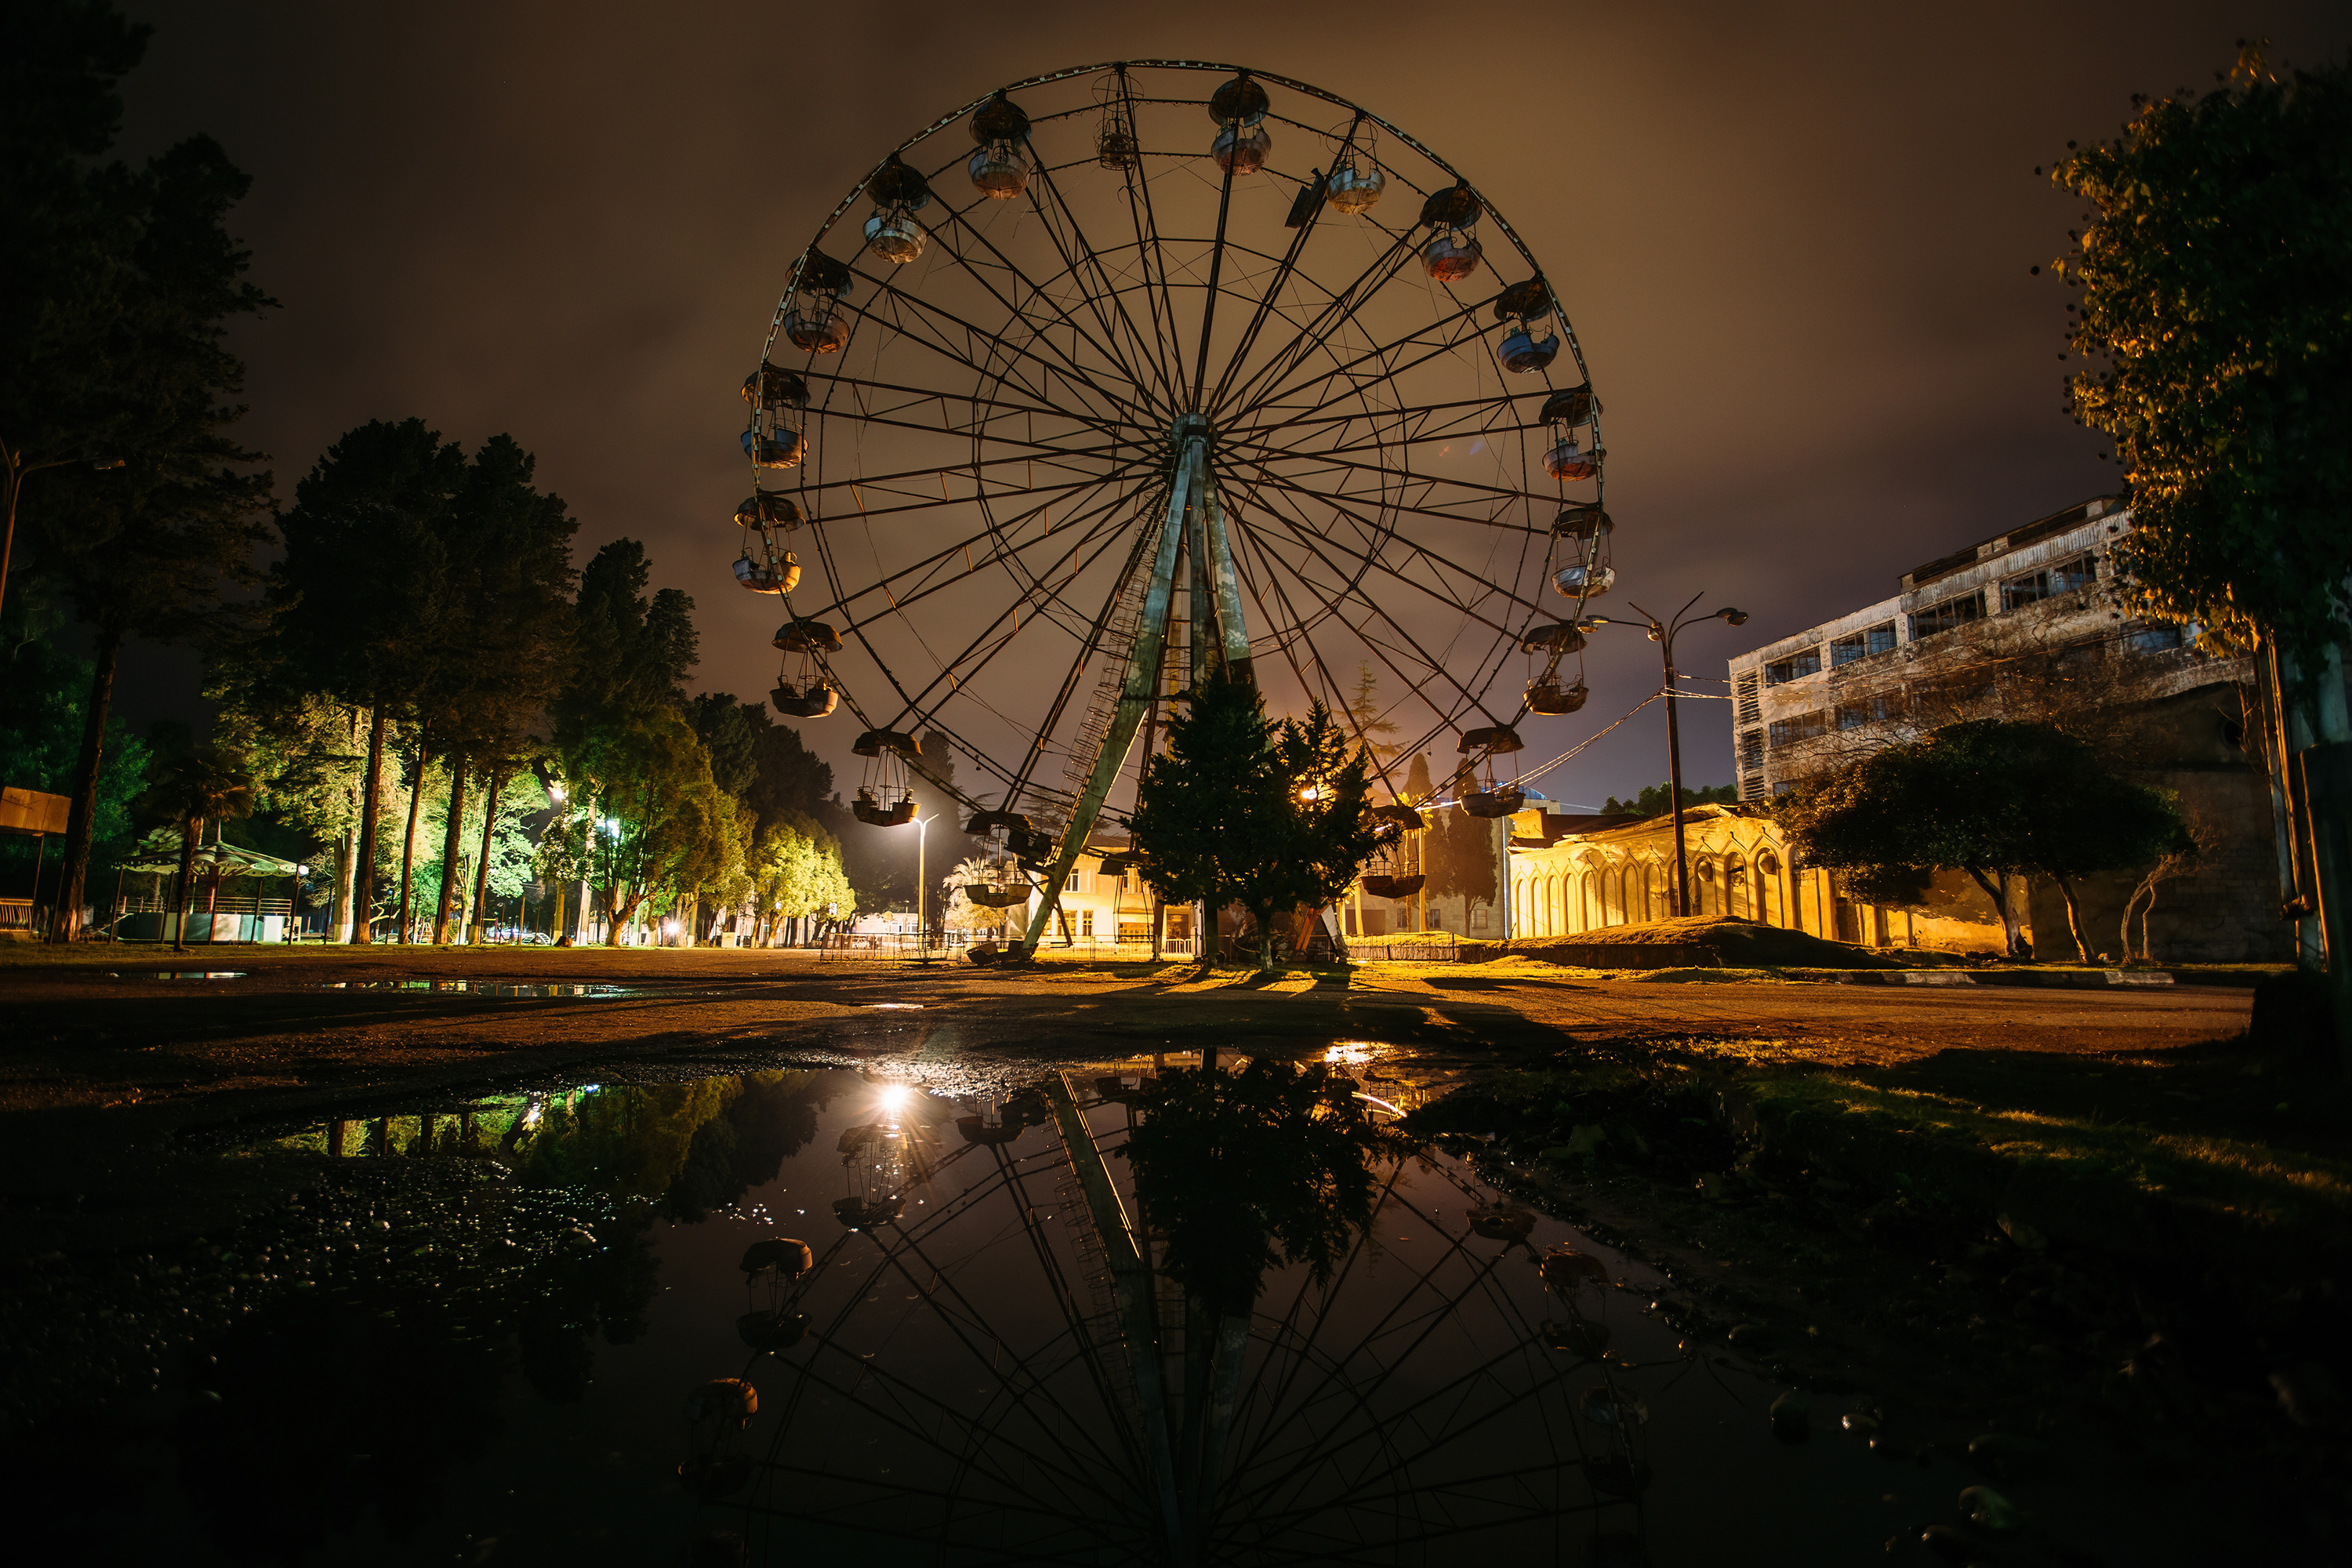 Old rusty broken abandoned Ferris wheel at night. | Source: Shutterstock